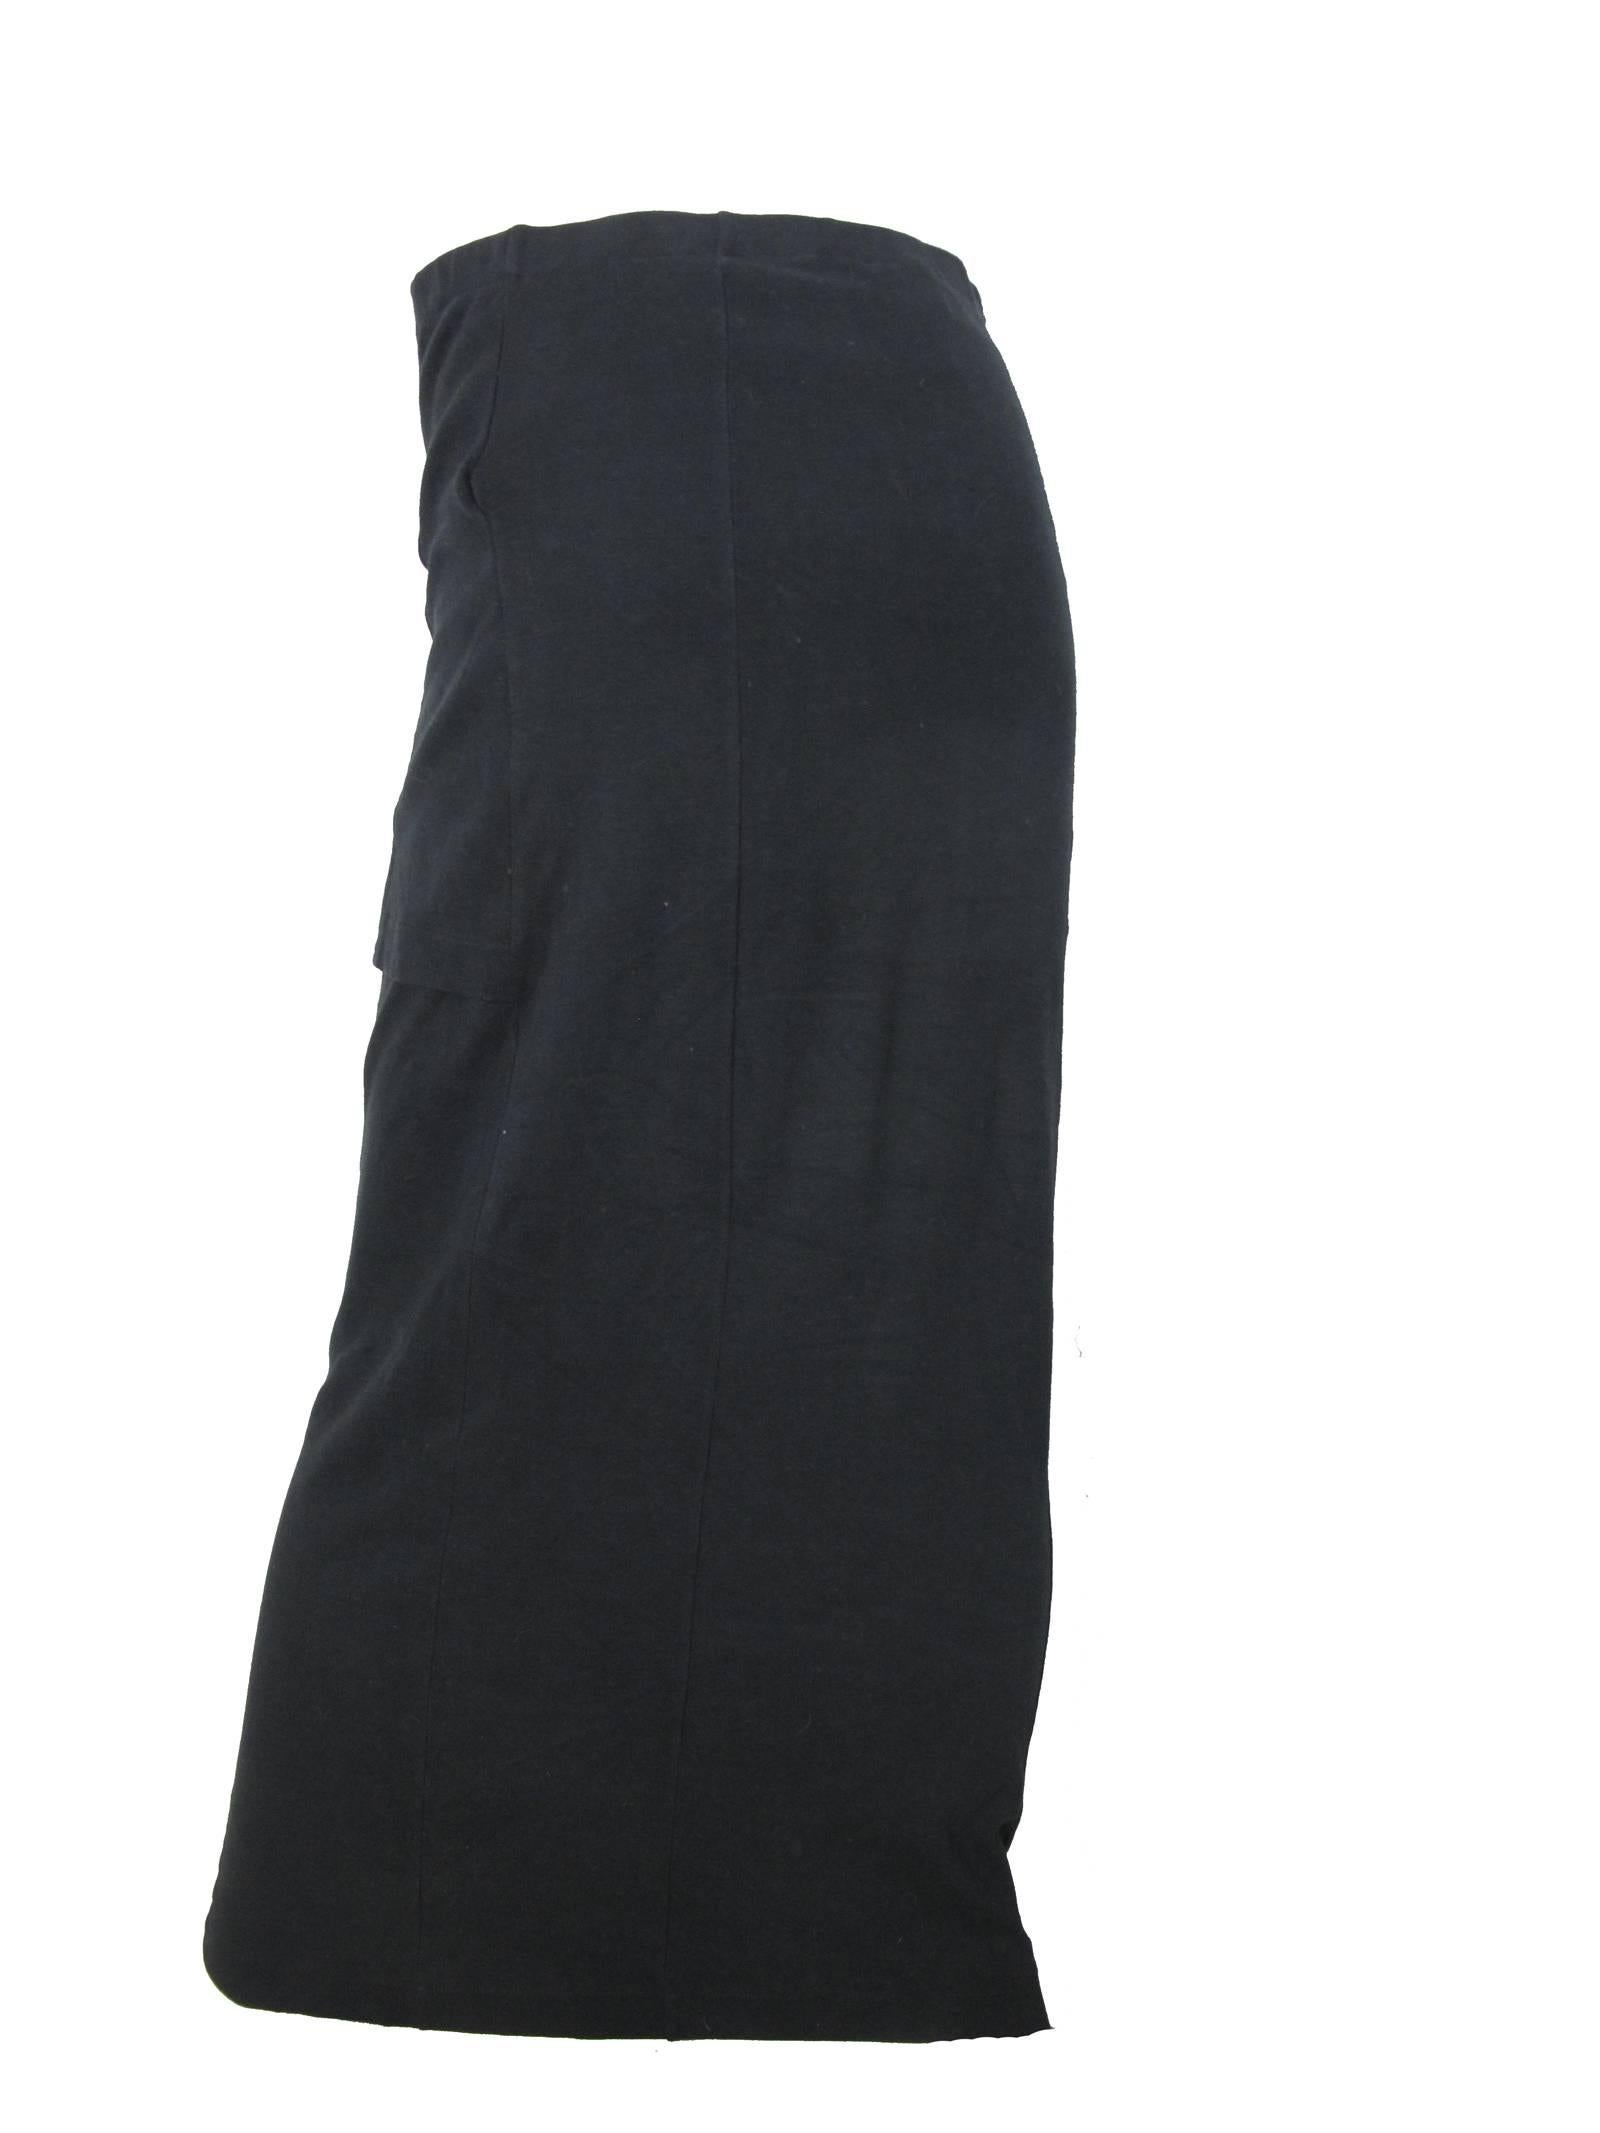 Comme des Garcons black cotton skirt with overlapping front cummerbund. 
Size Medium  
29